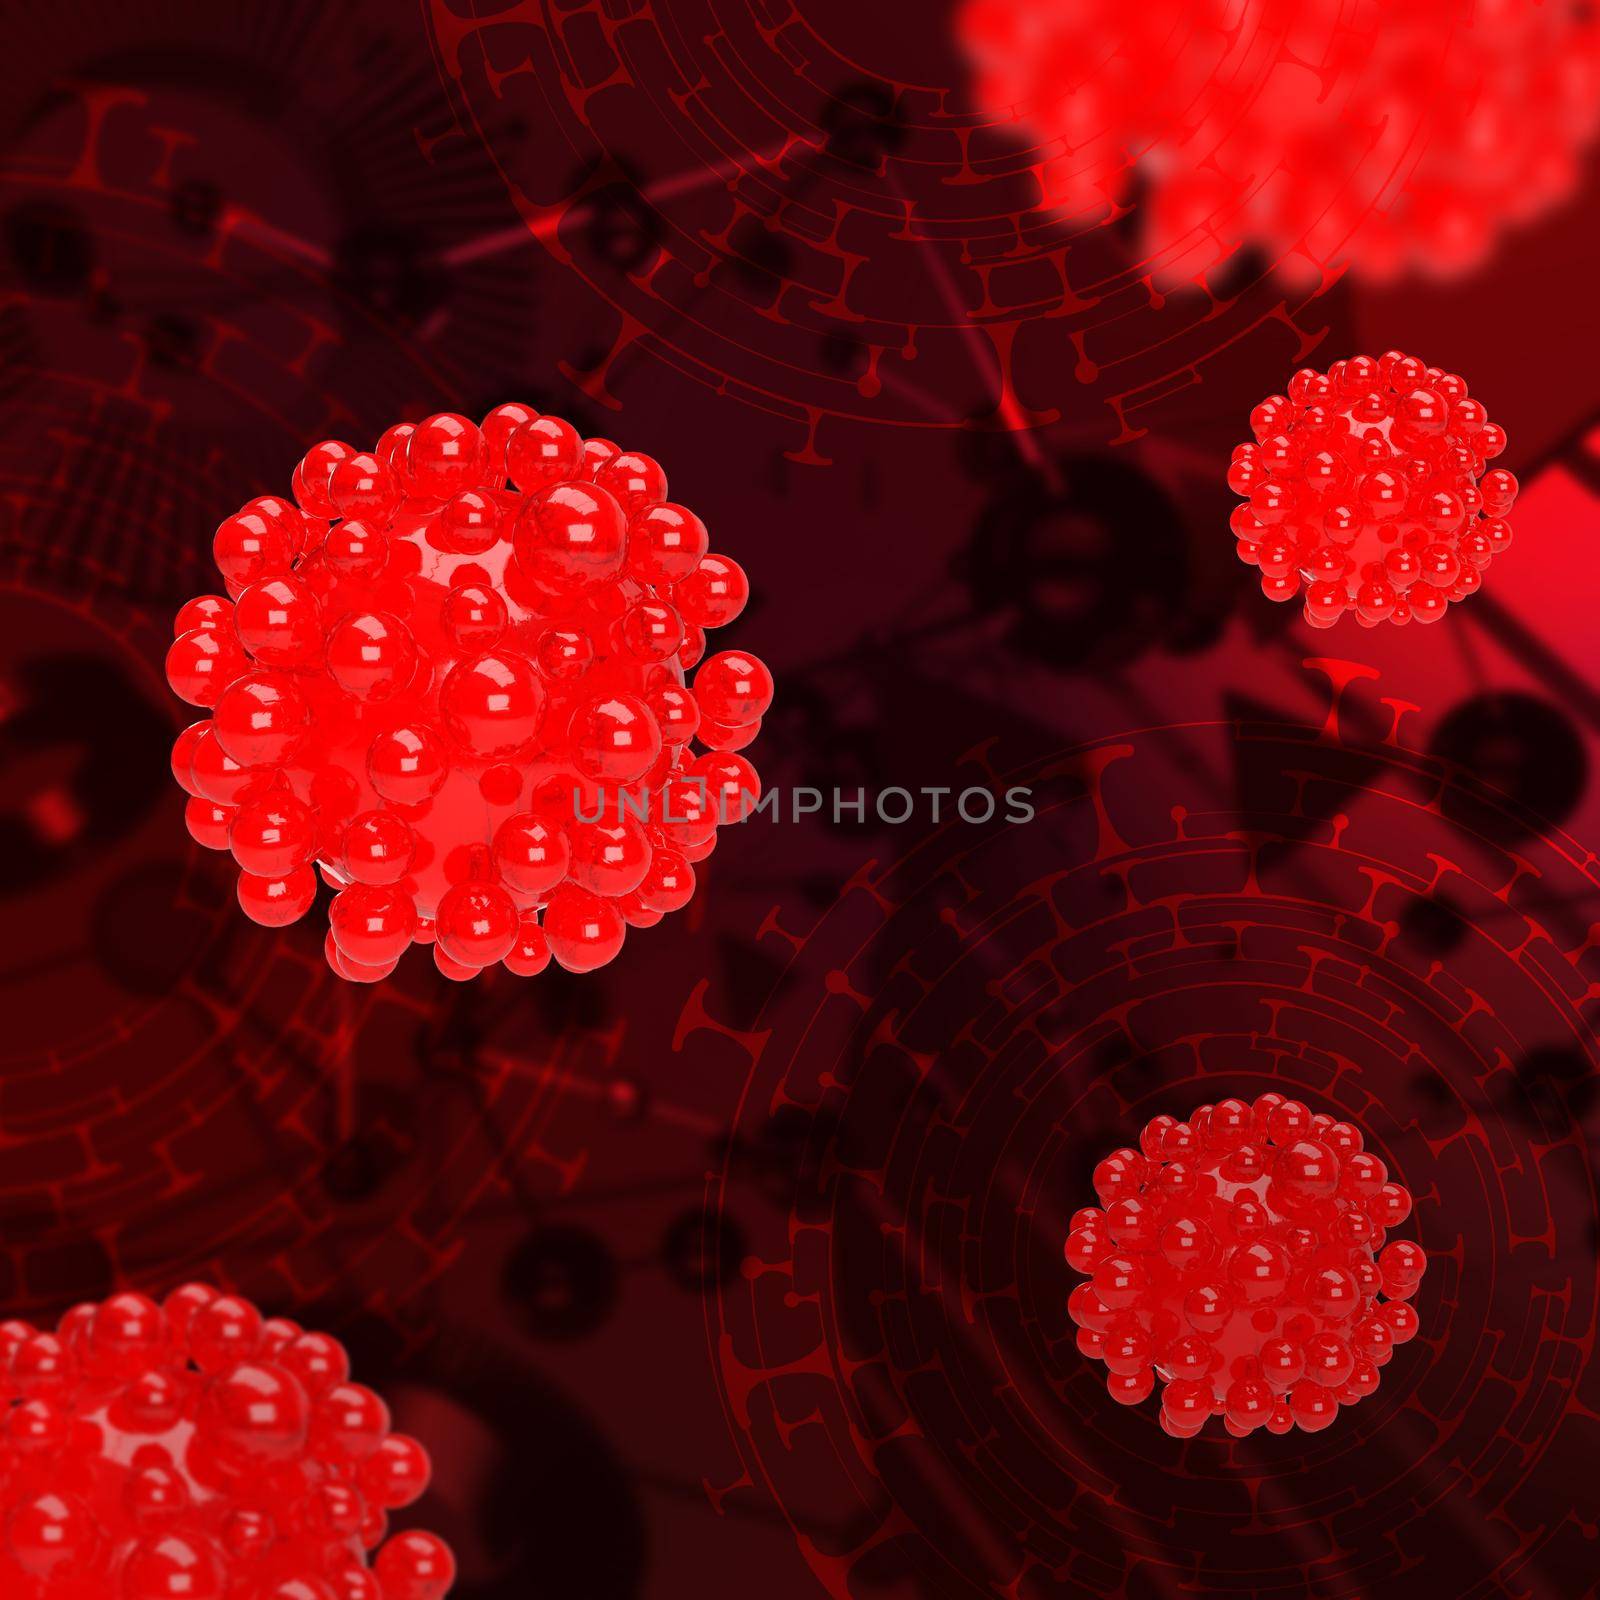 Abstract techno 3d corona virus outbreak illustration by kisika